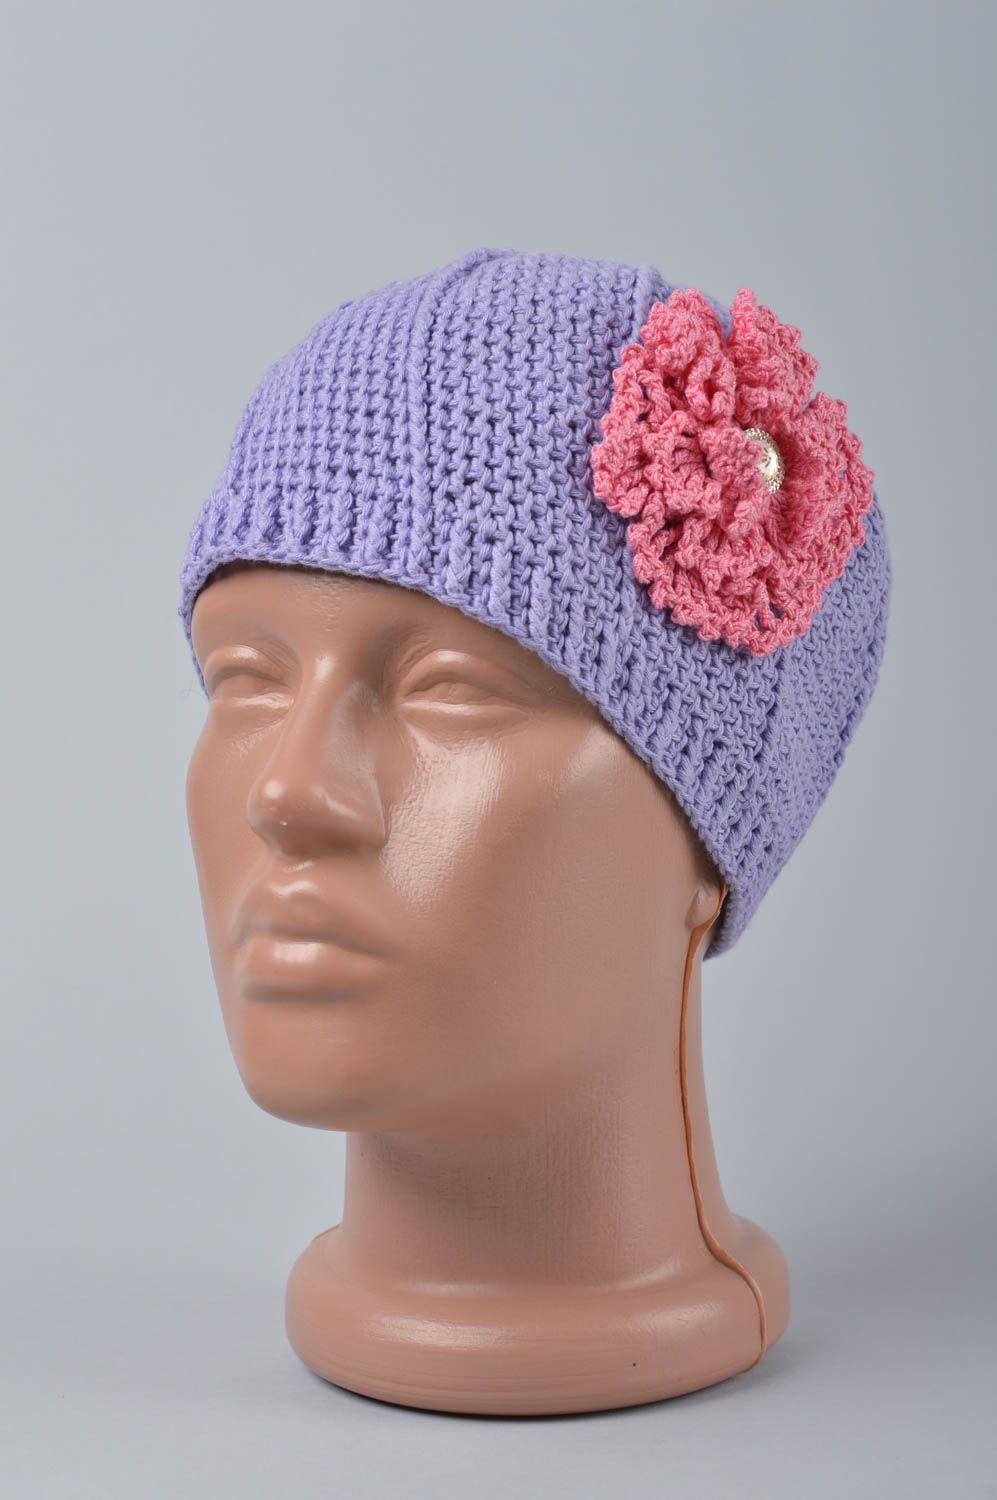 Crochet baby hat handmade toddler hat kids accessories gift ideas for kids photo 1